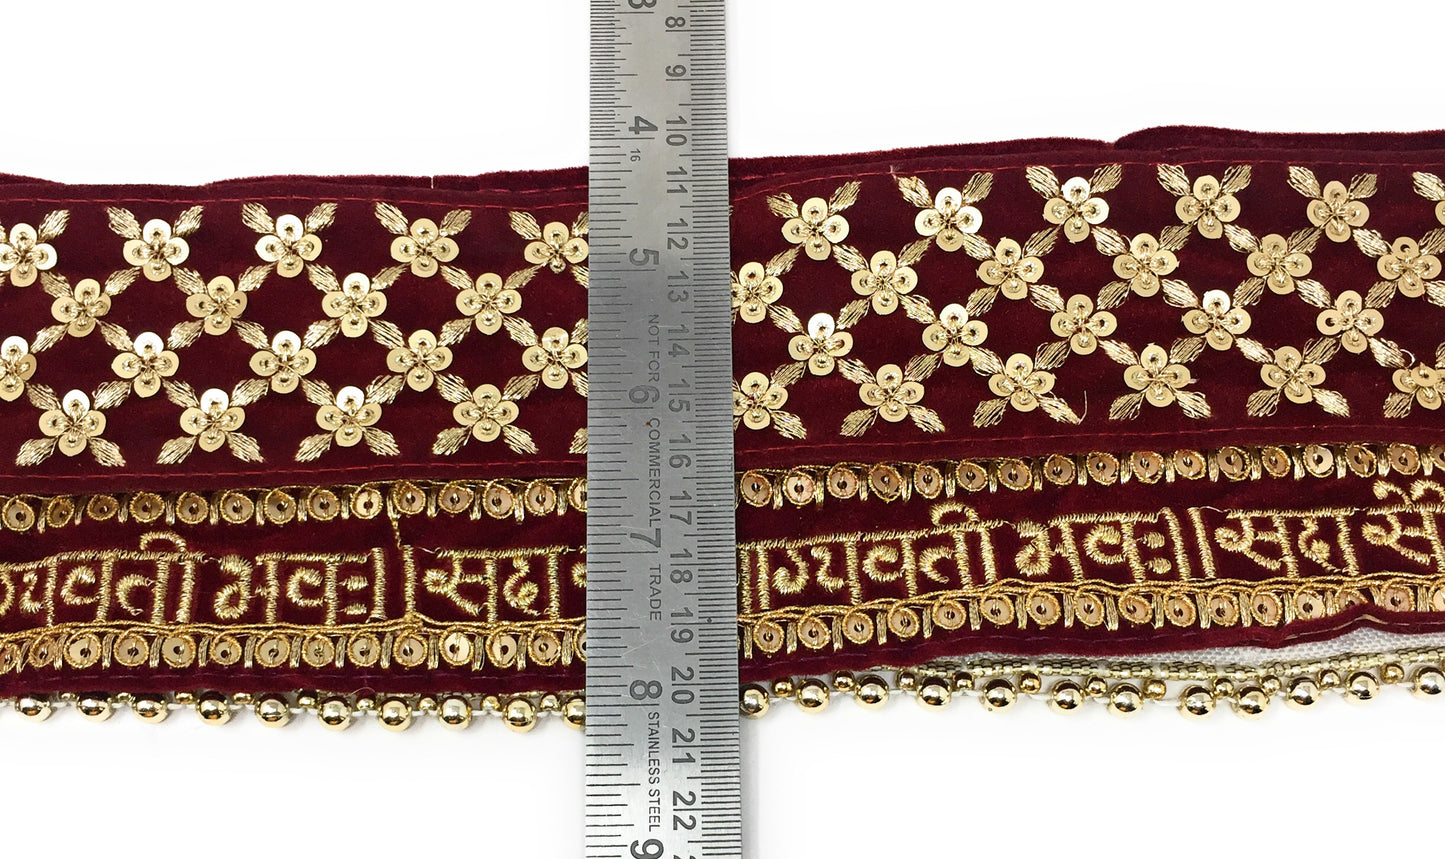 Bridal Sada Saubhagyavati Bhav Lace Border Trim - 9 Meter Long